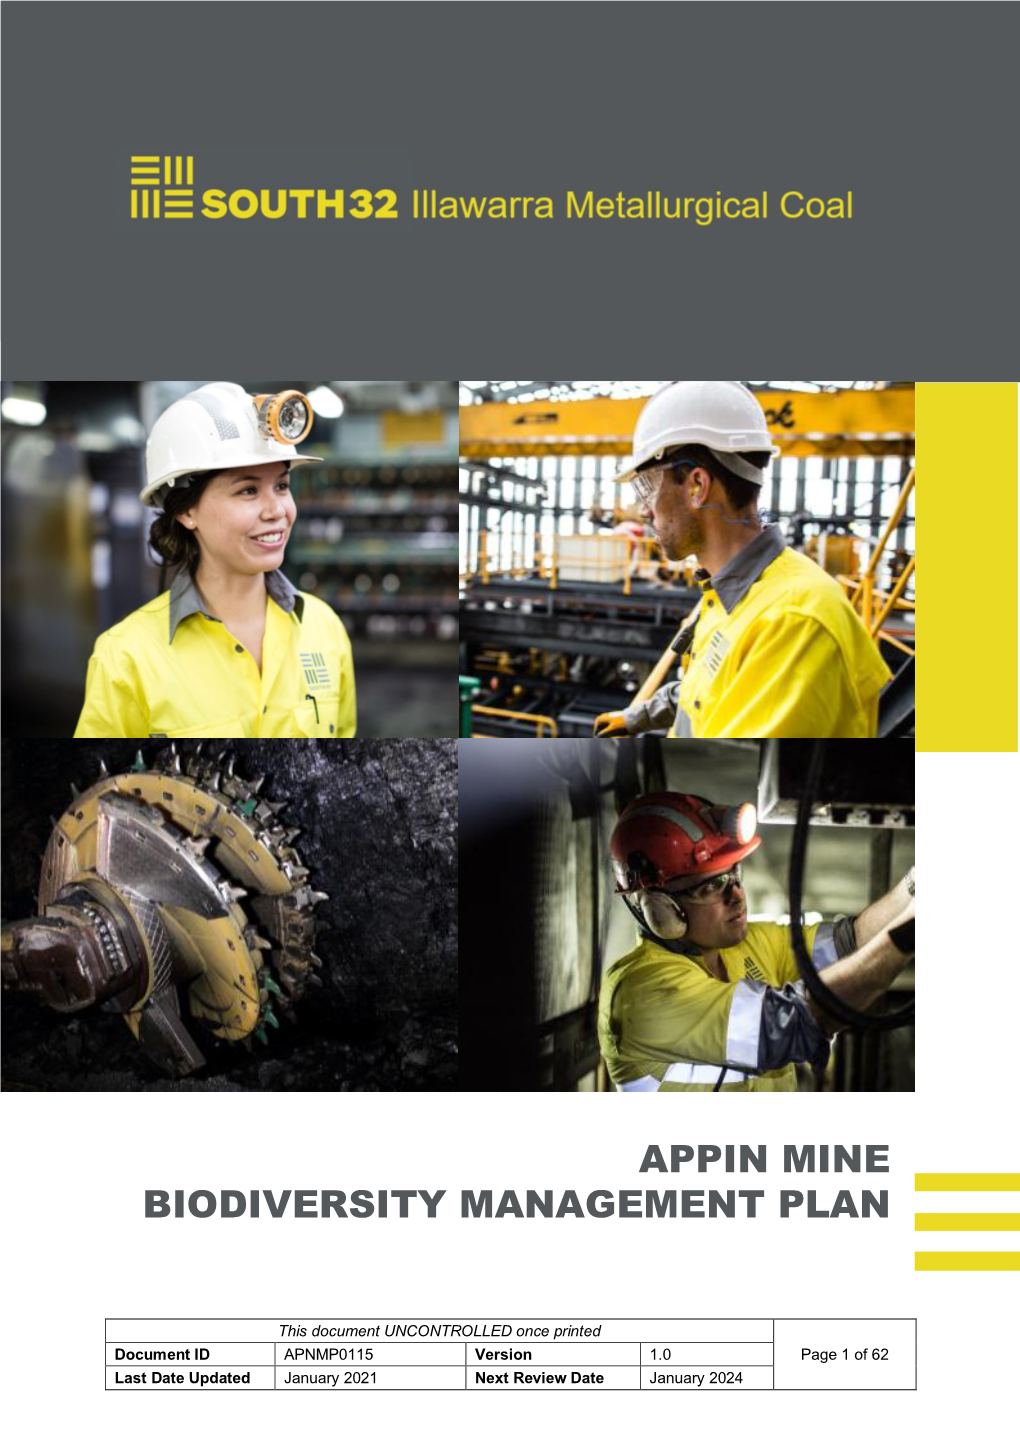 Appin Mine Biodiversity Management Plan